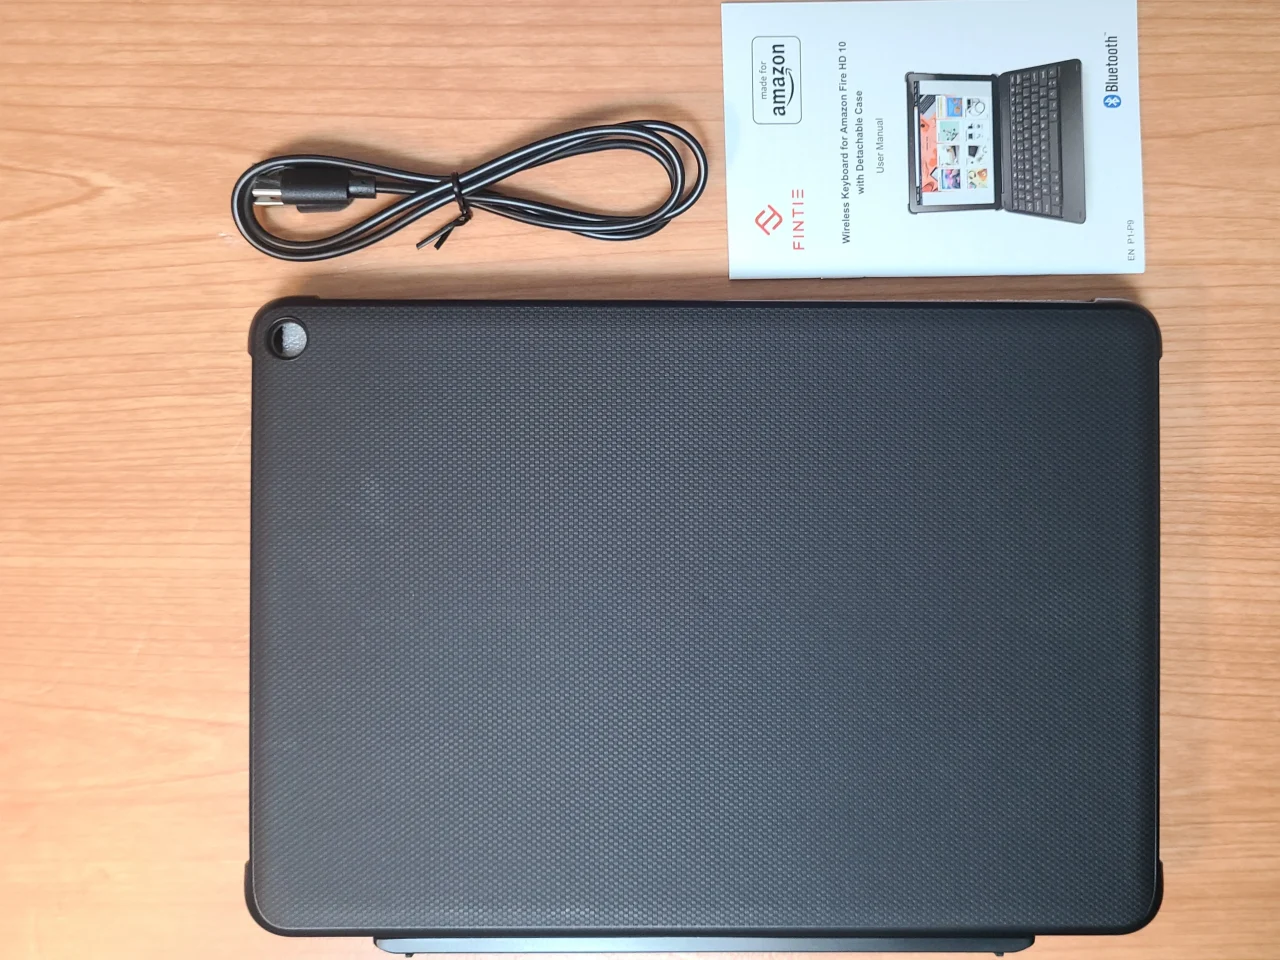 『Fire HD 10』の純正キーボード『Fintie Bluetoothキーボード付きカバー』の同梱物